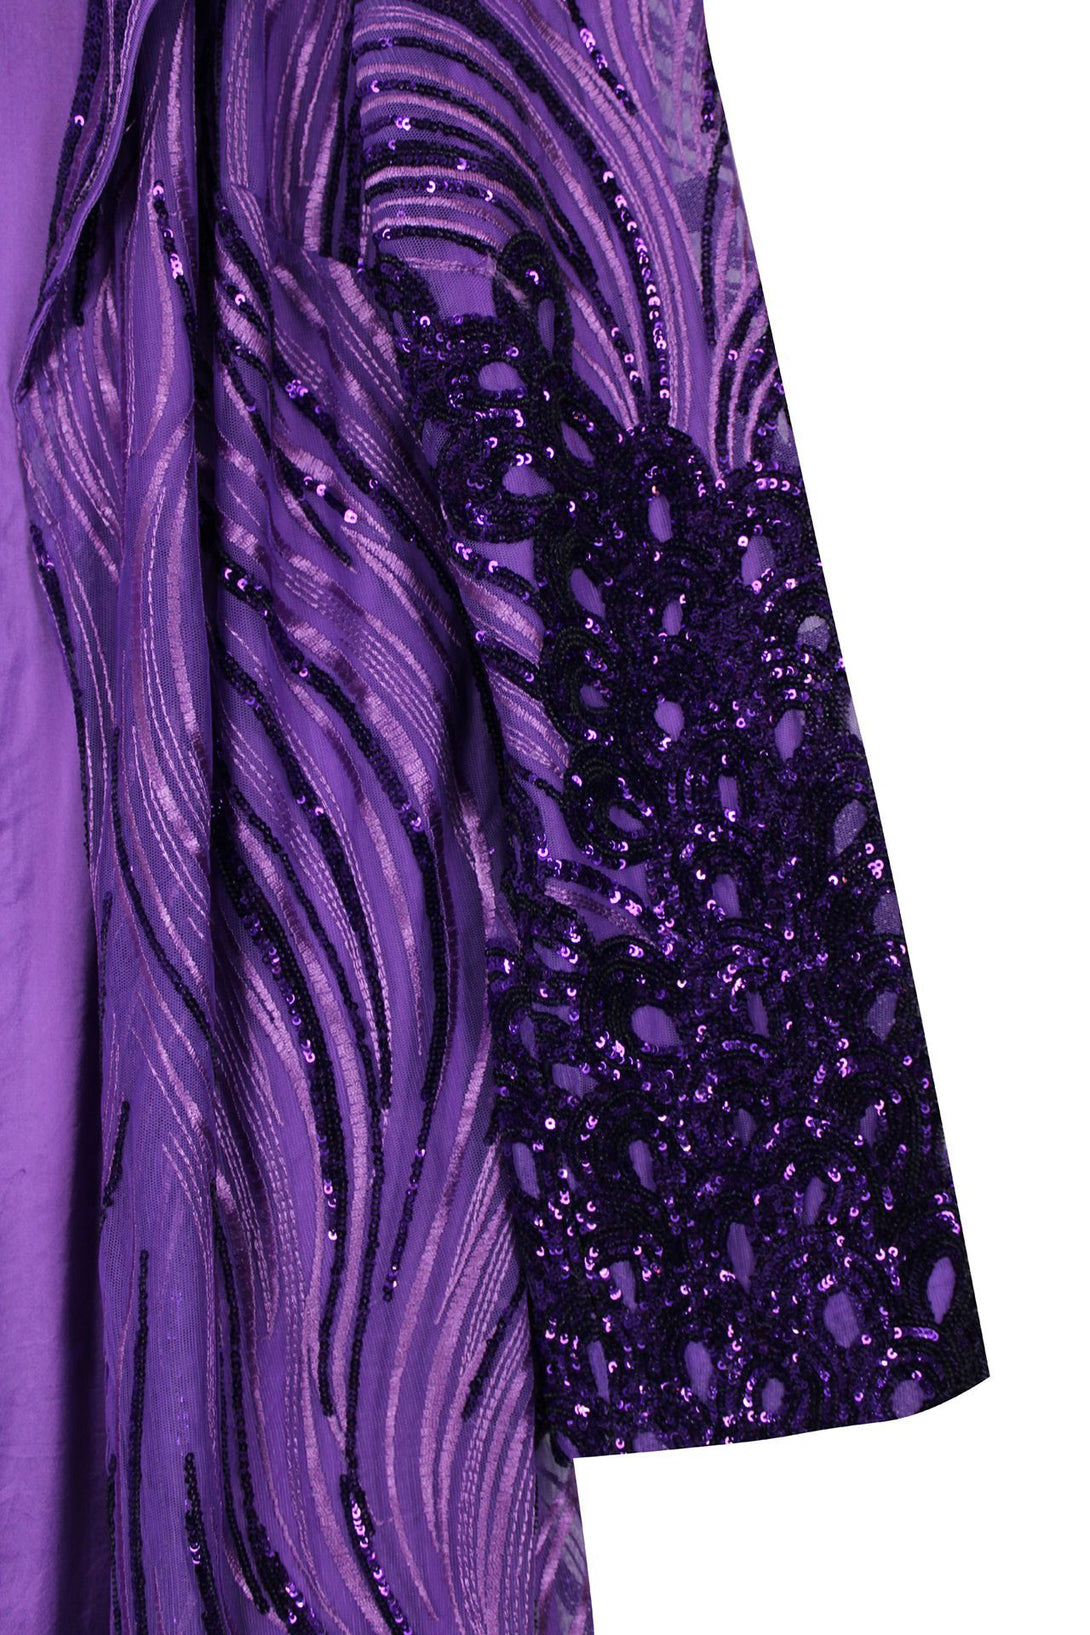 Women-Purple-Designer-Sequin-Long-Duster-Jacket-By-Kyle-Richards